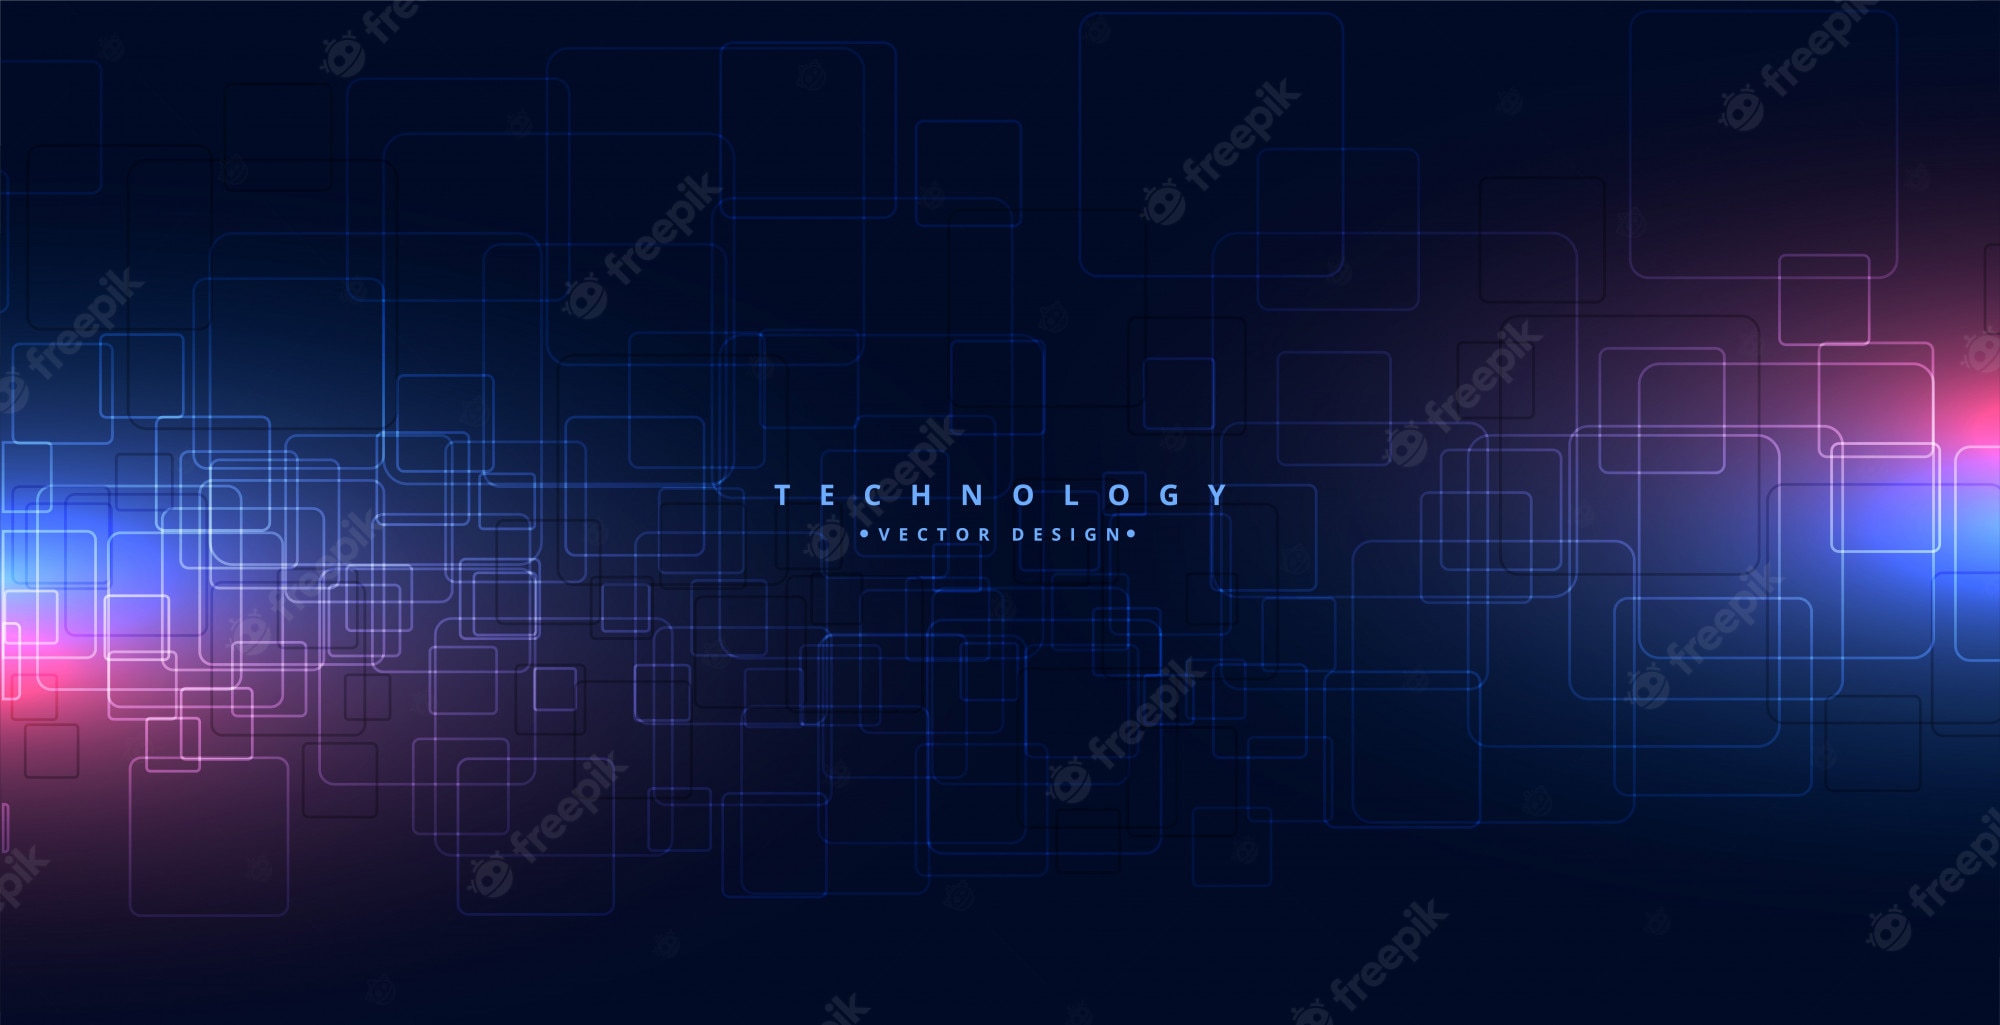 Technology wallpaper Image. Free Vectors, & PSD